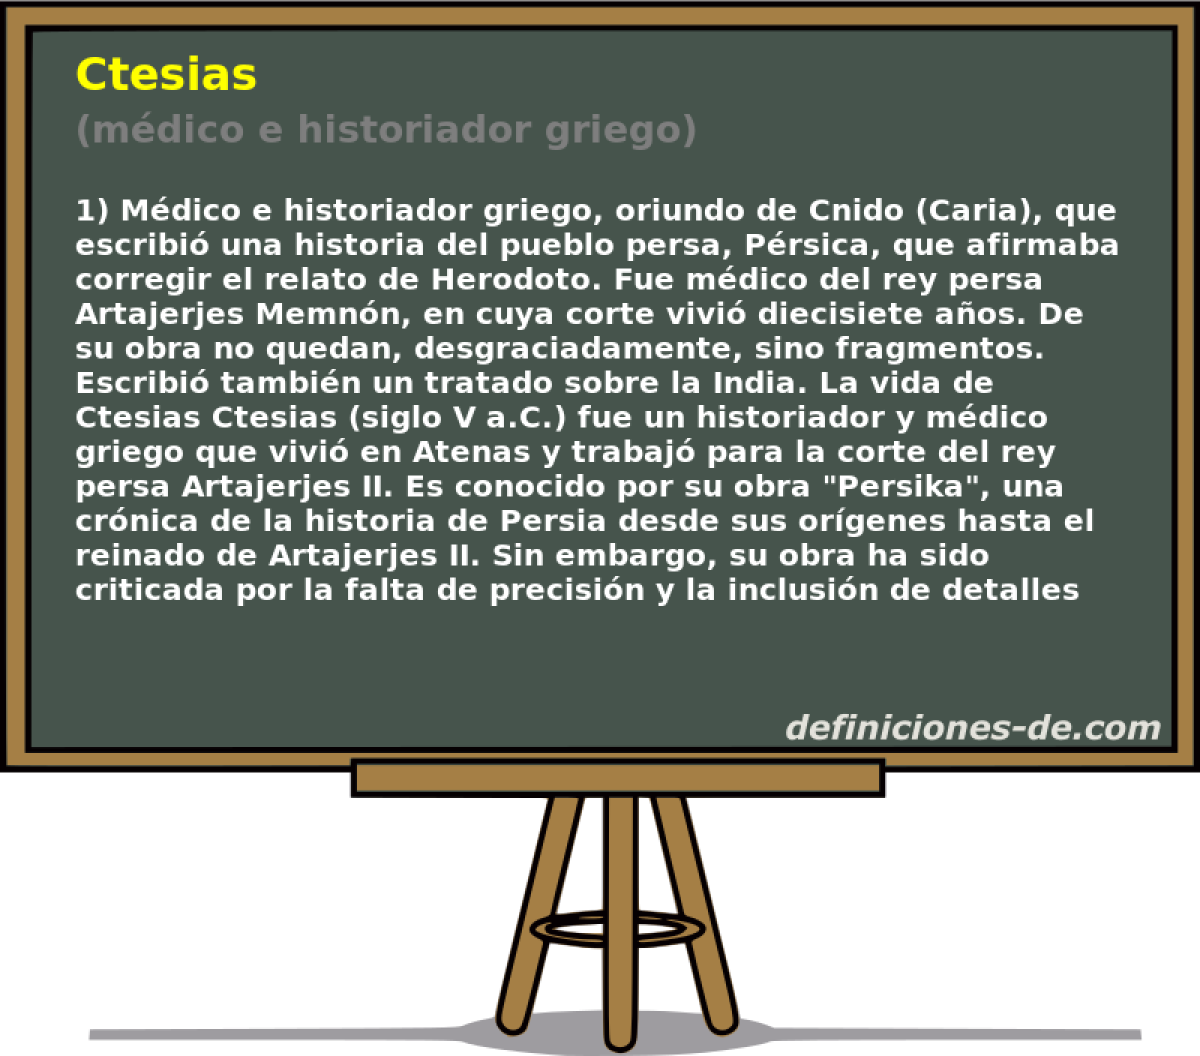 Ctesias (mdico e historiador griego)